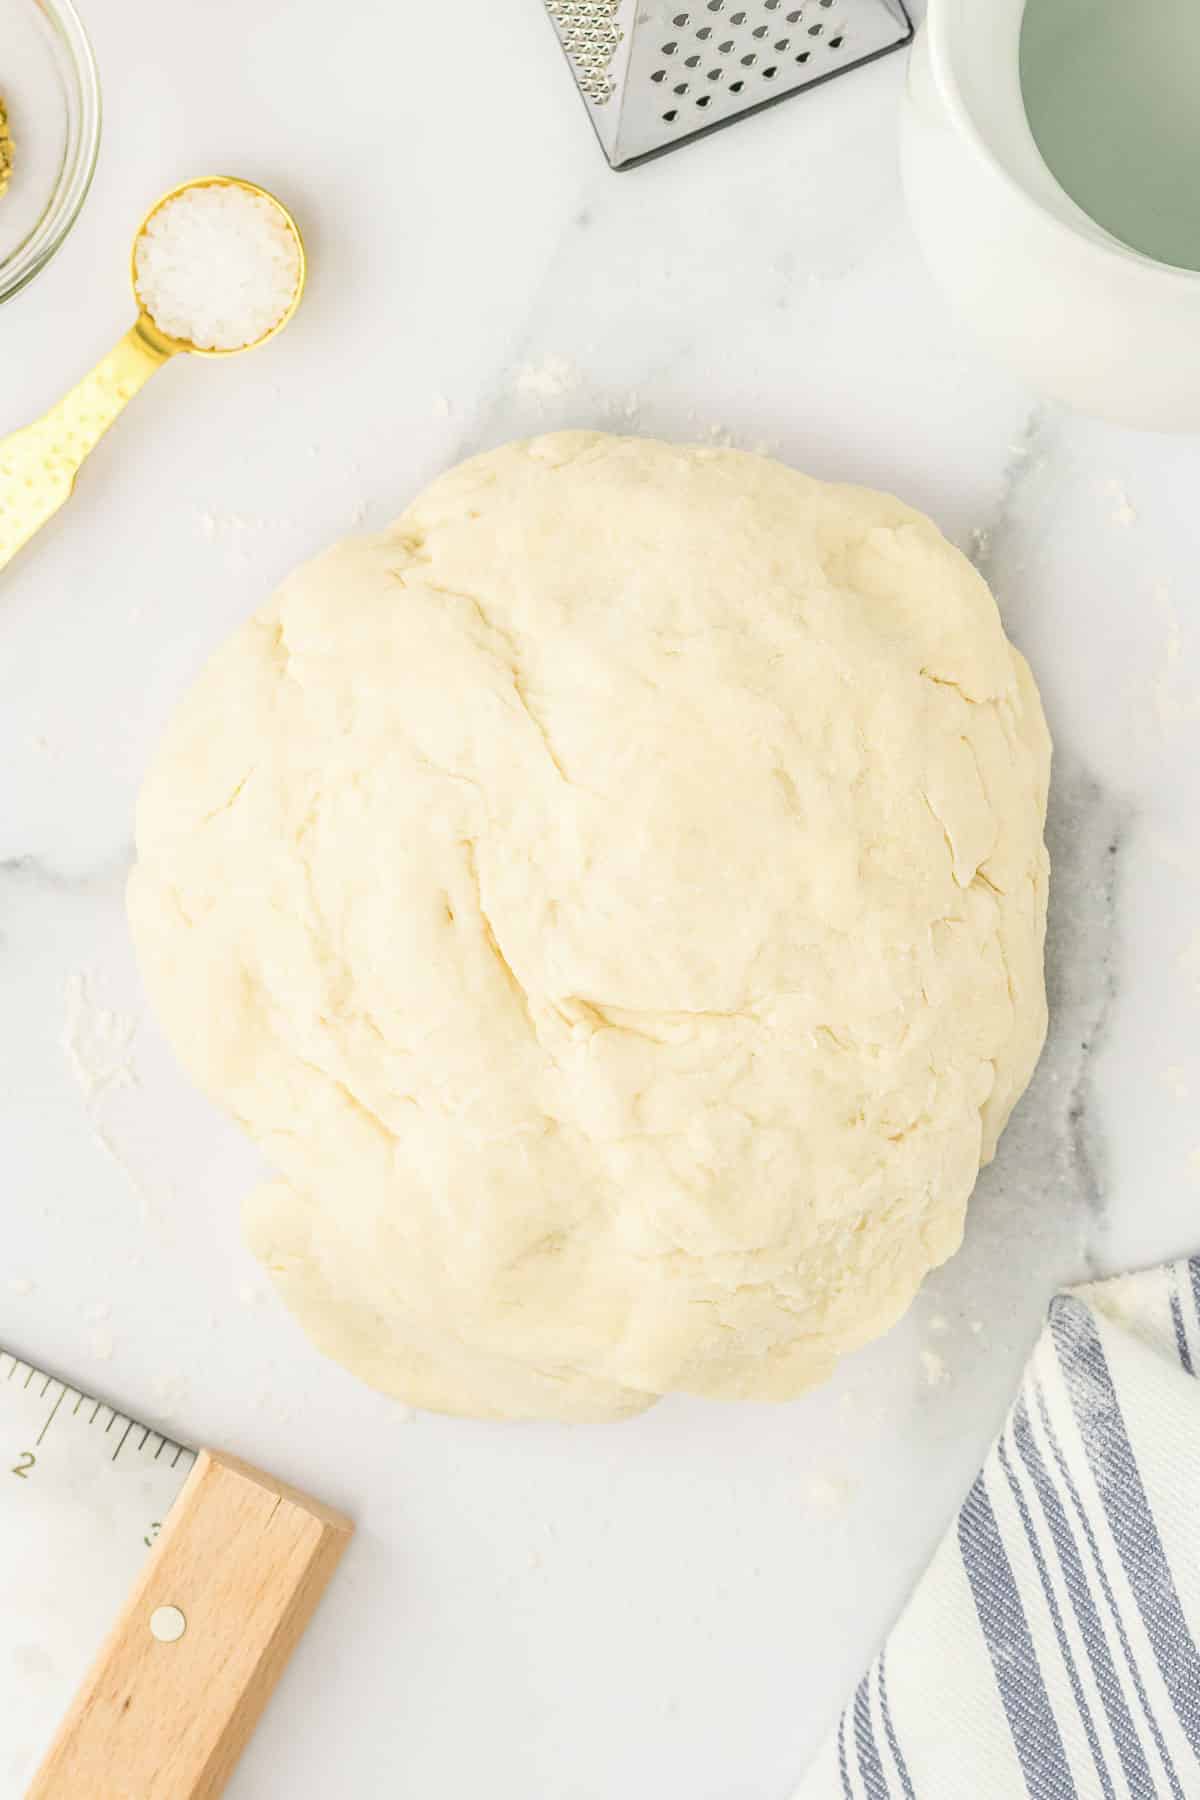 A ball of bread dough on a table.